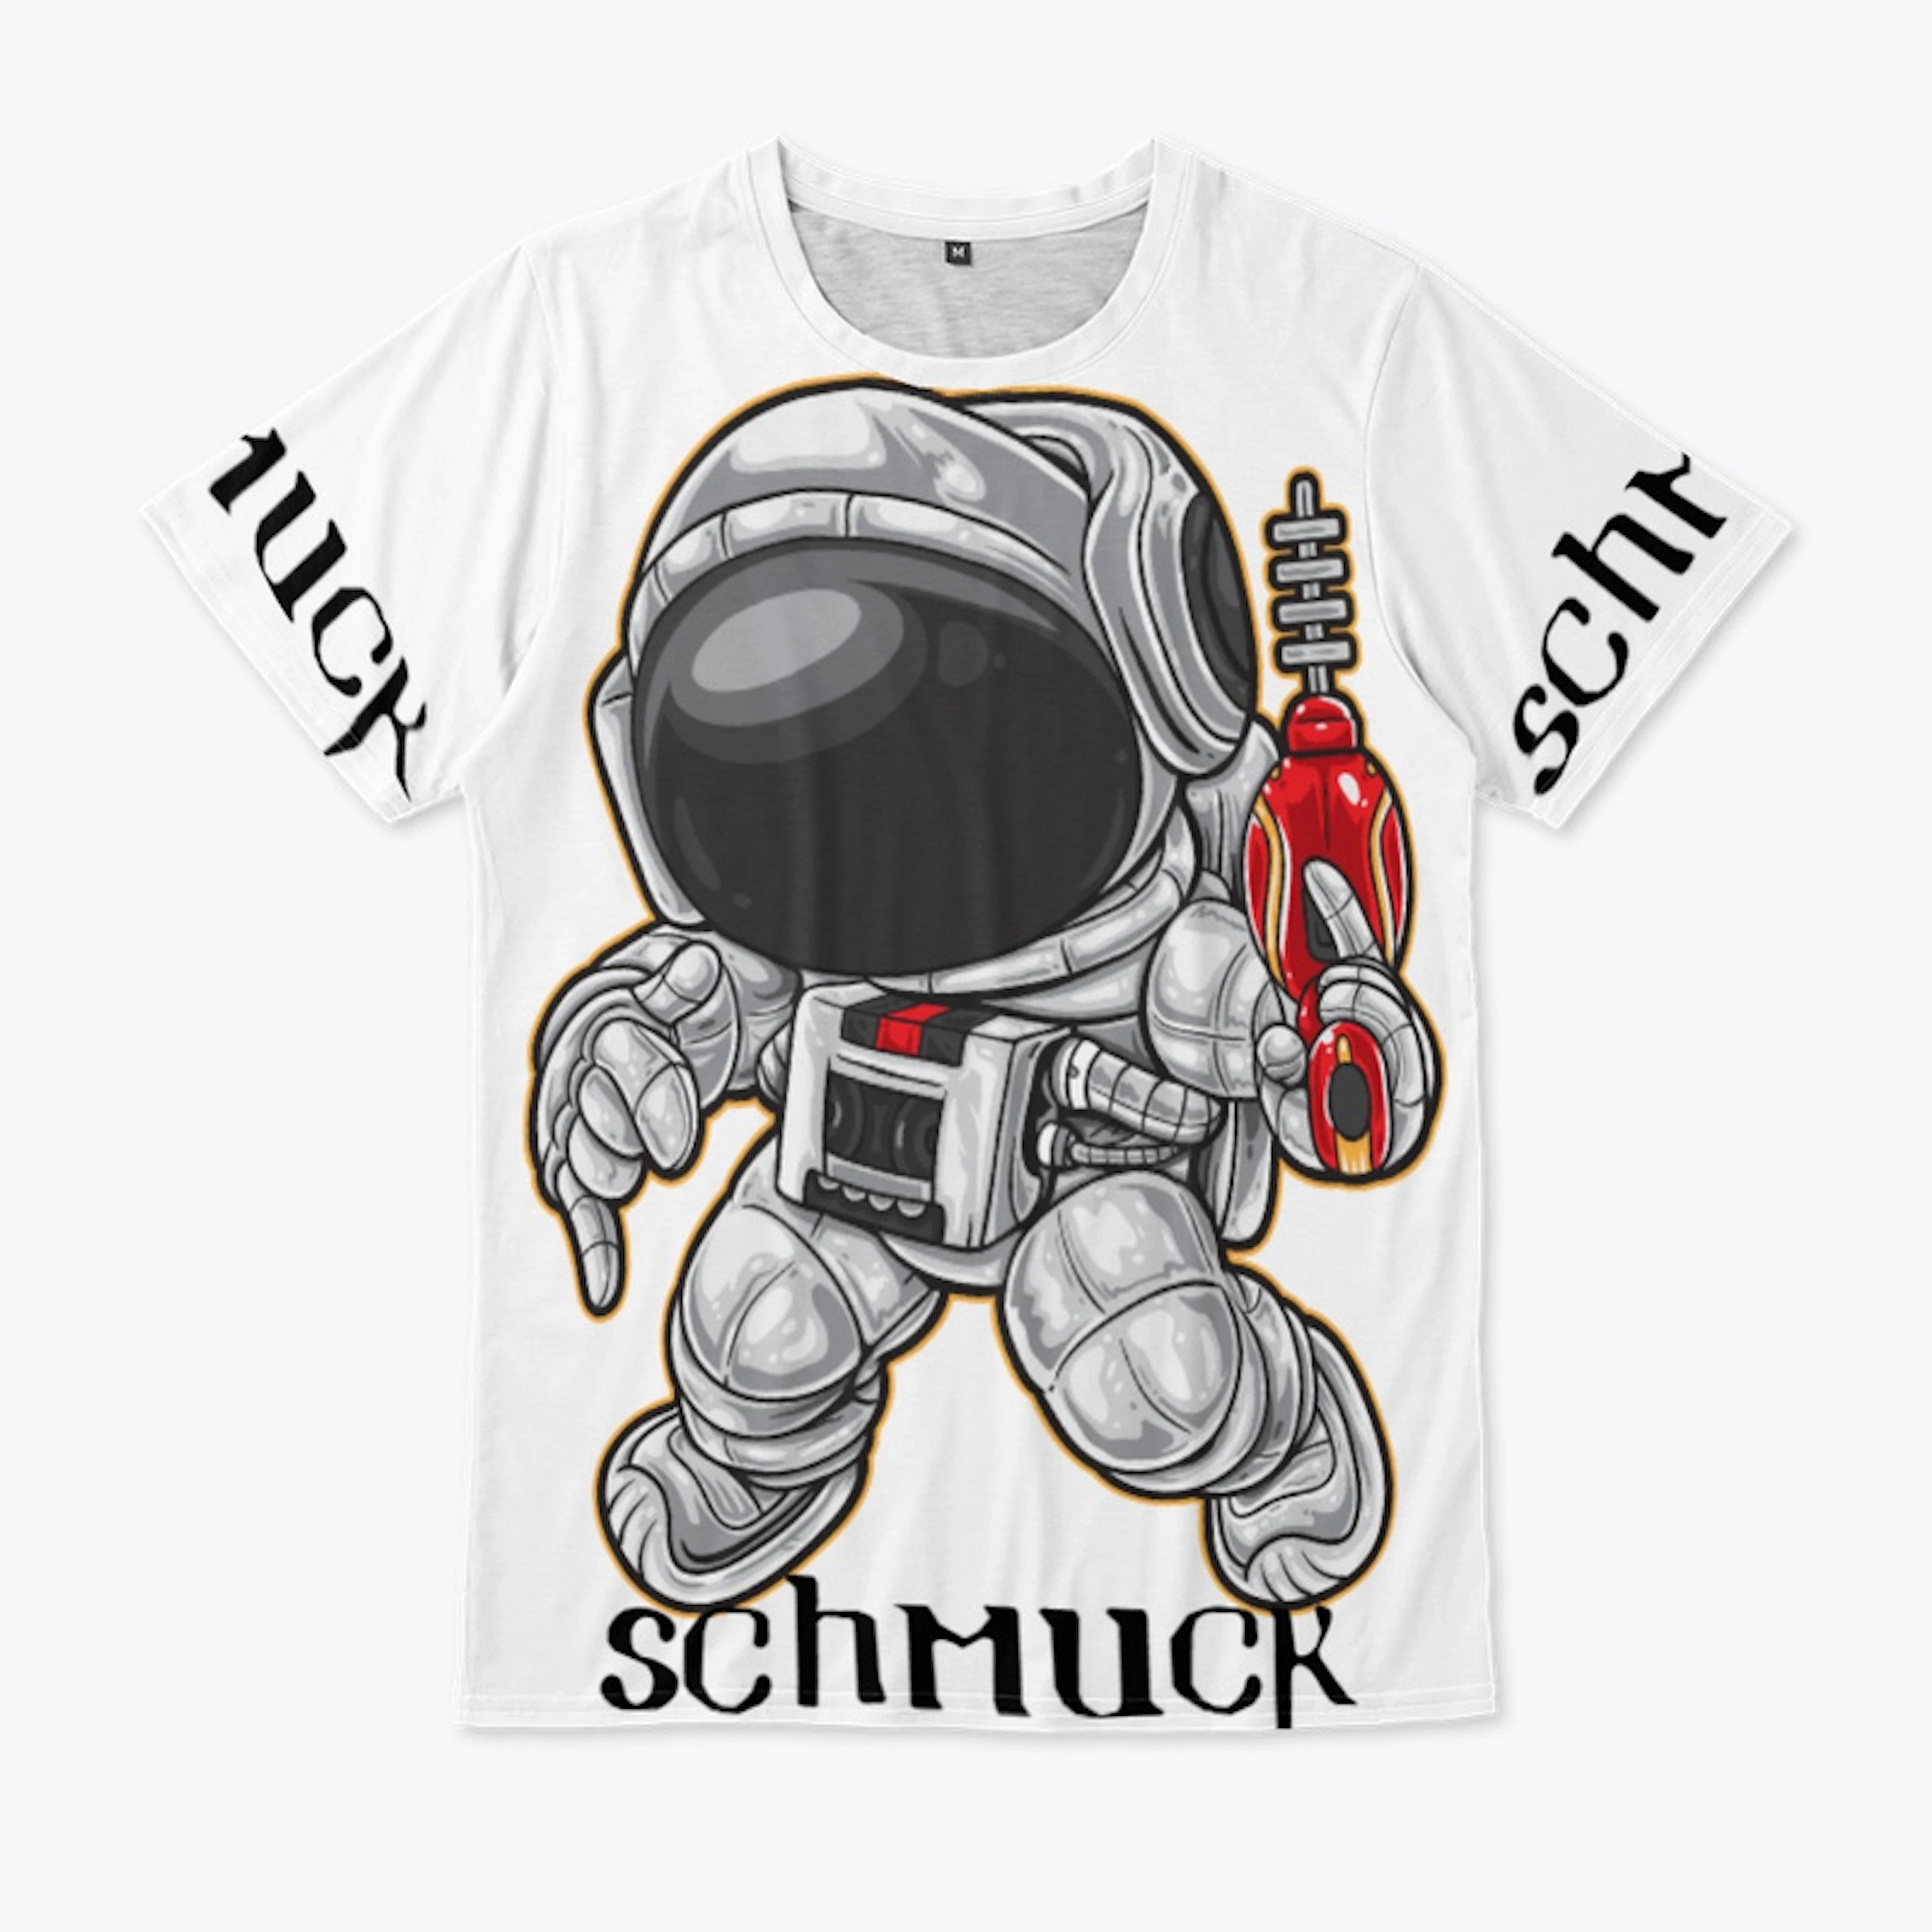 Astro Schmuck